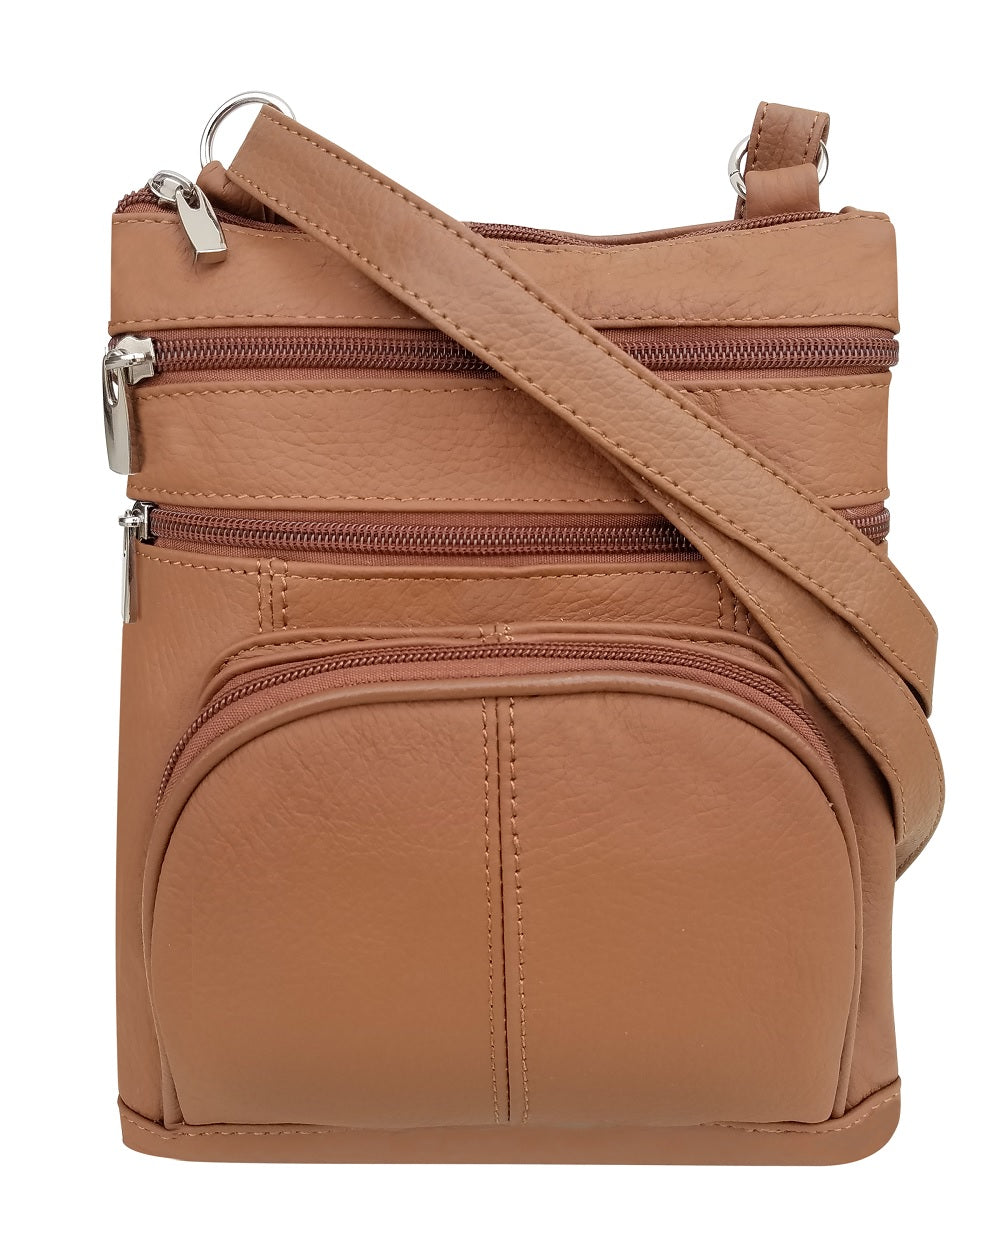 Tovoso Genuine Leather Multi-pocket Crossbody Purse Bag Built